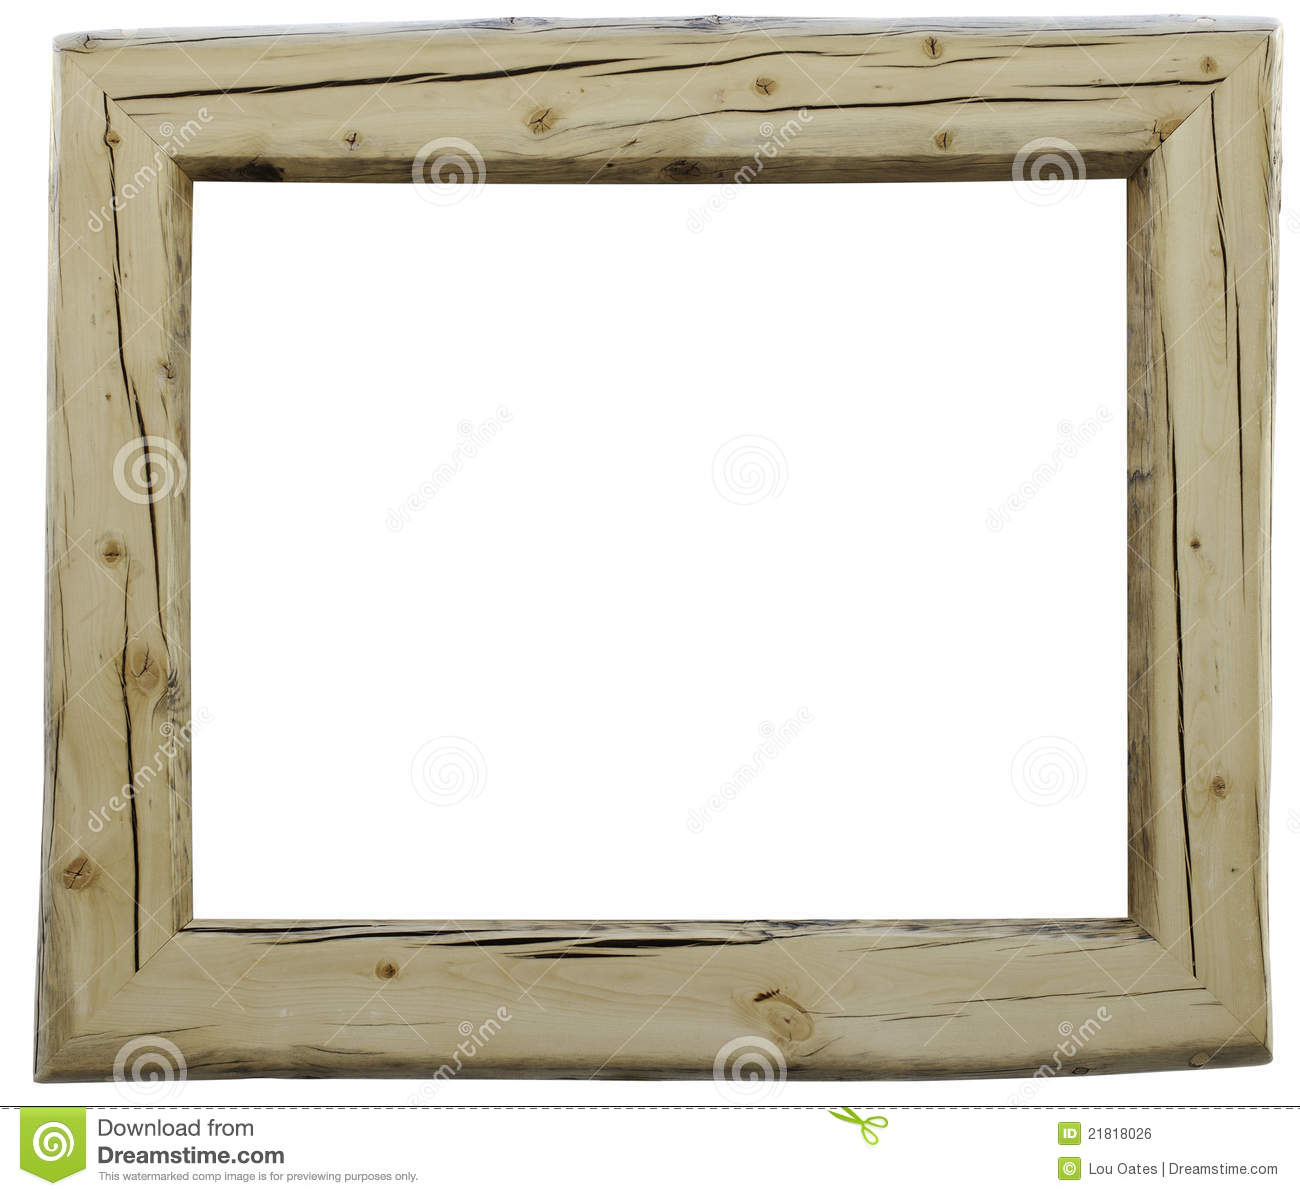 Rustic Wood Frame Royalty Free Stock Image   Image  21818026